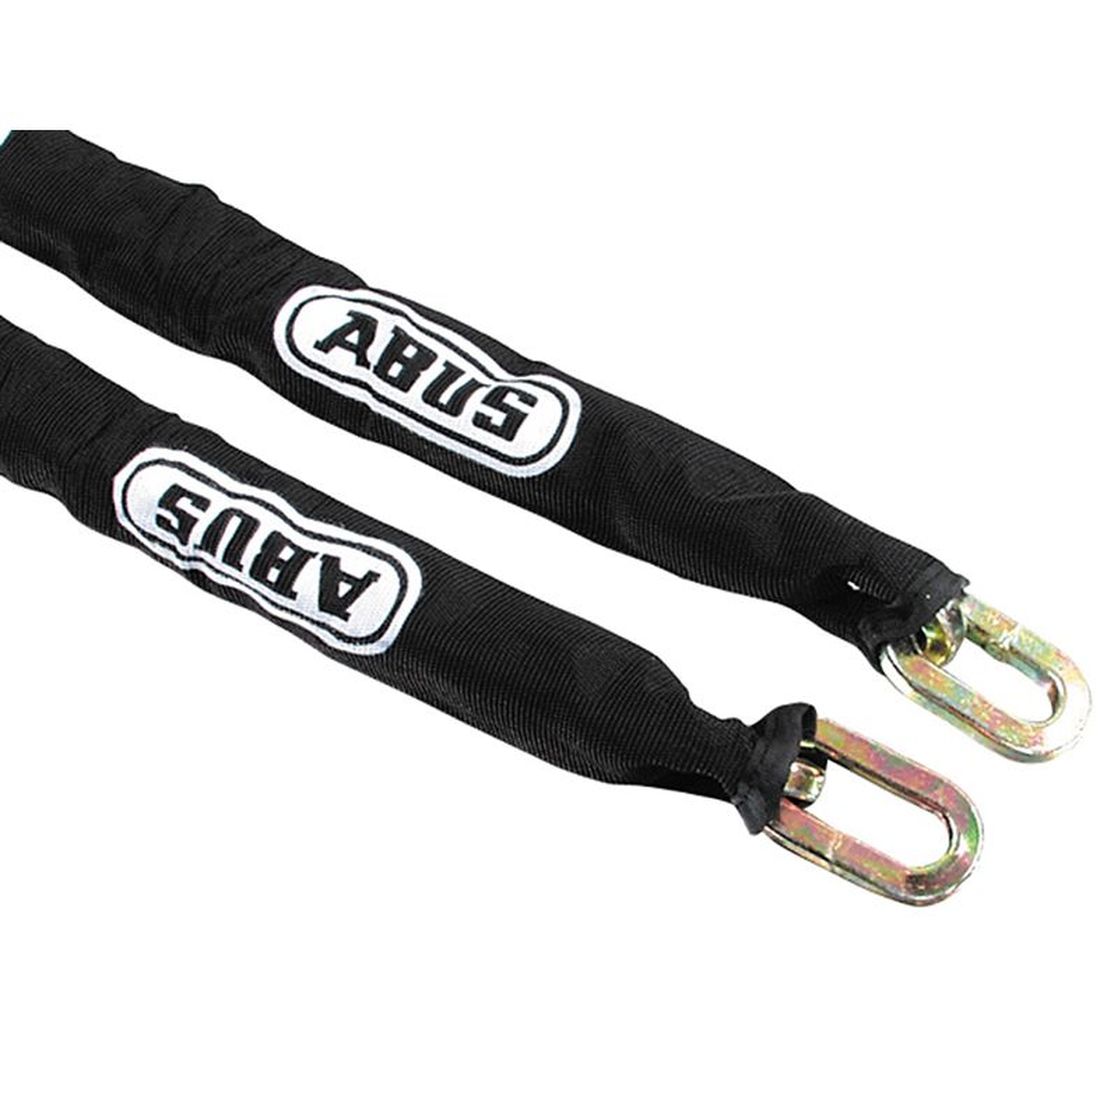 ABUS 10KS/200 Security Chain Length 200cm Link Diameter 10mm                         